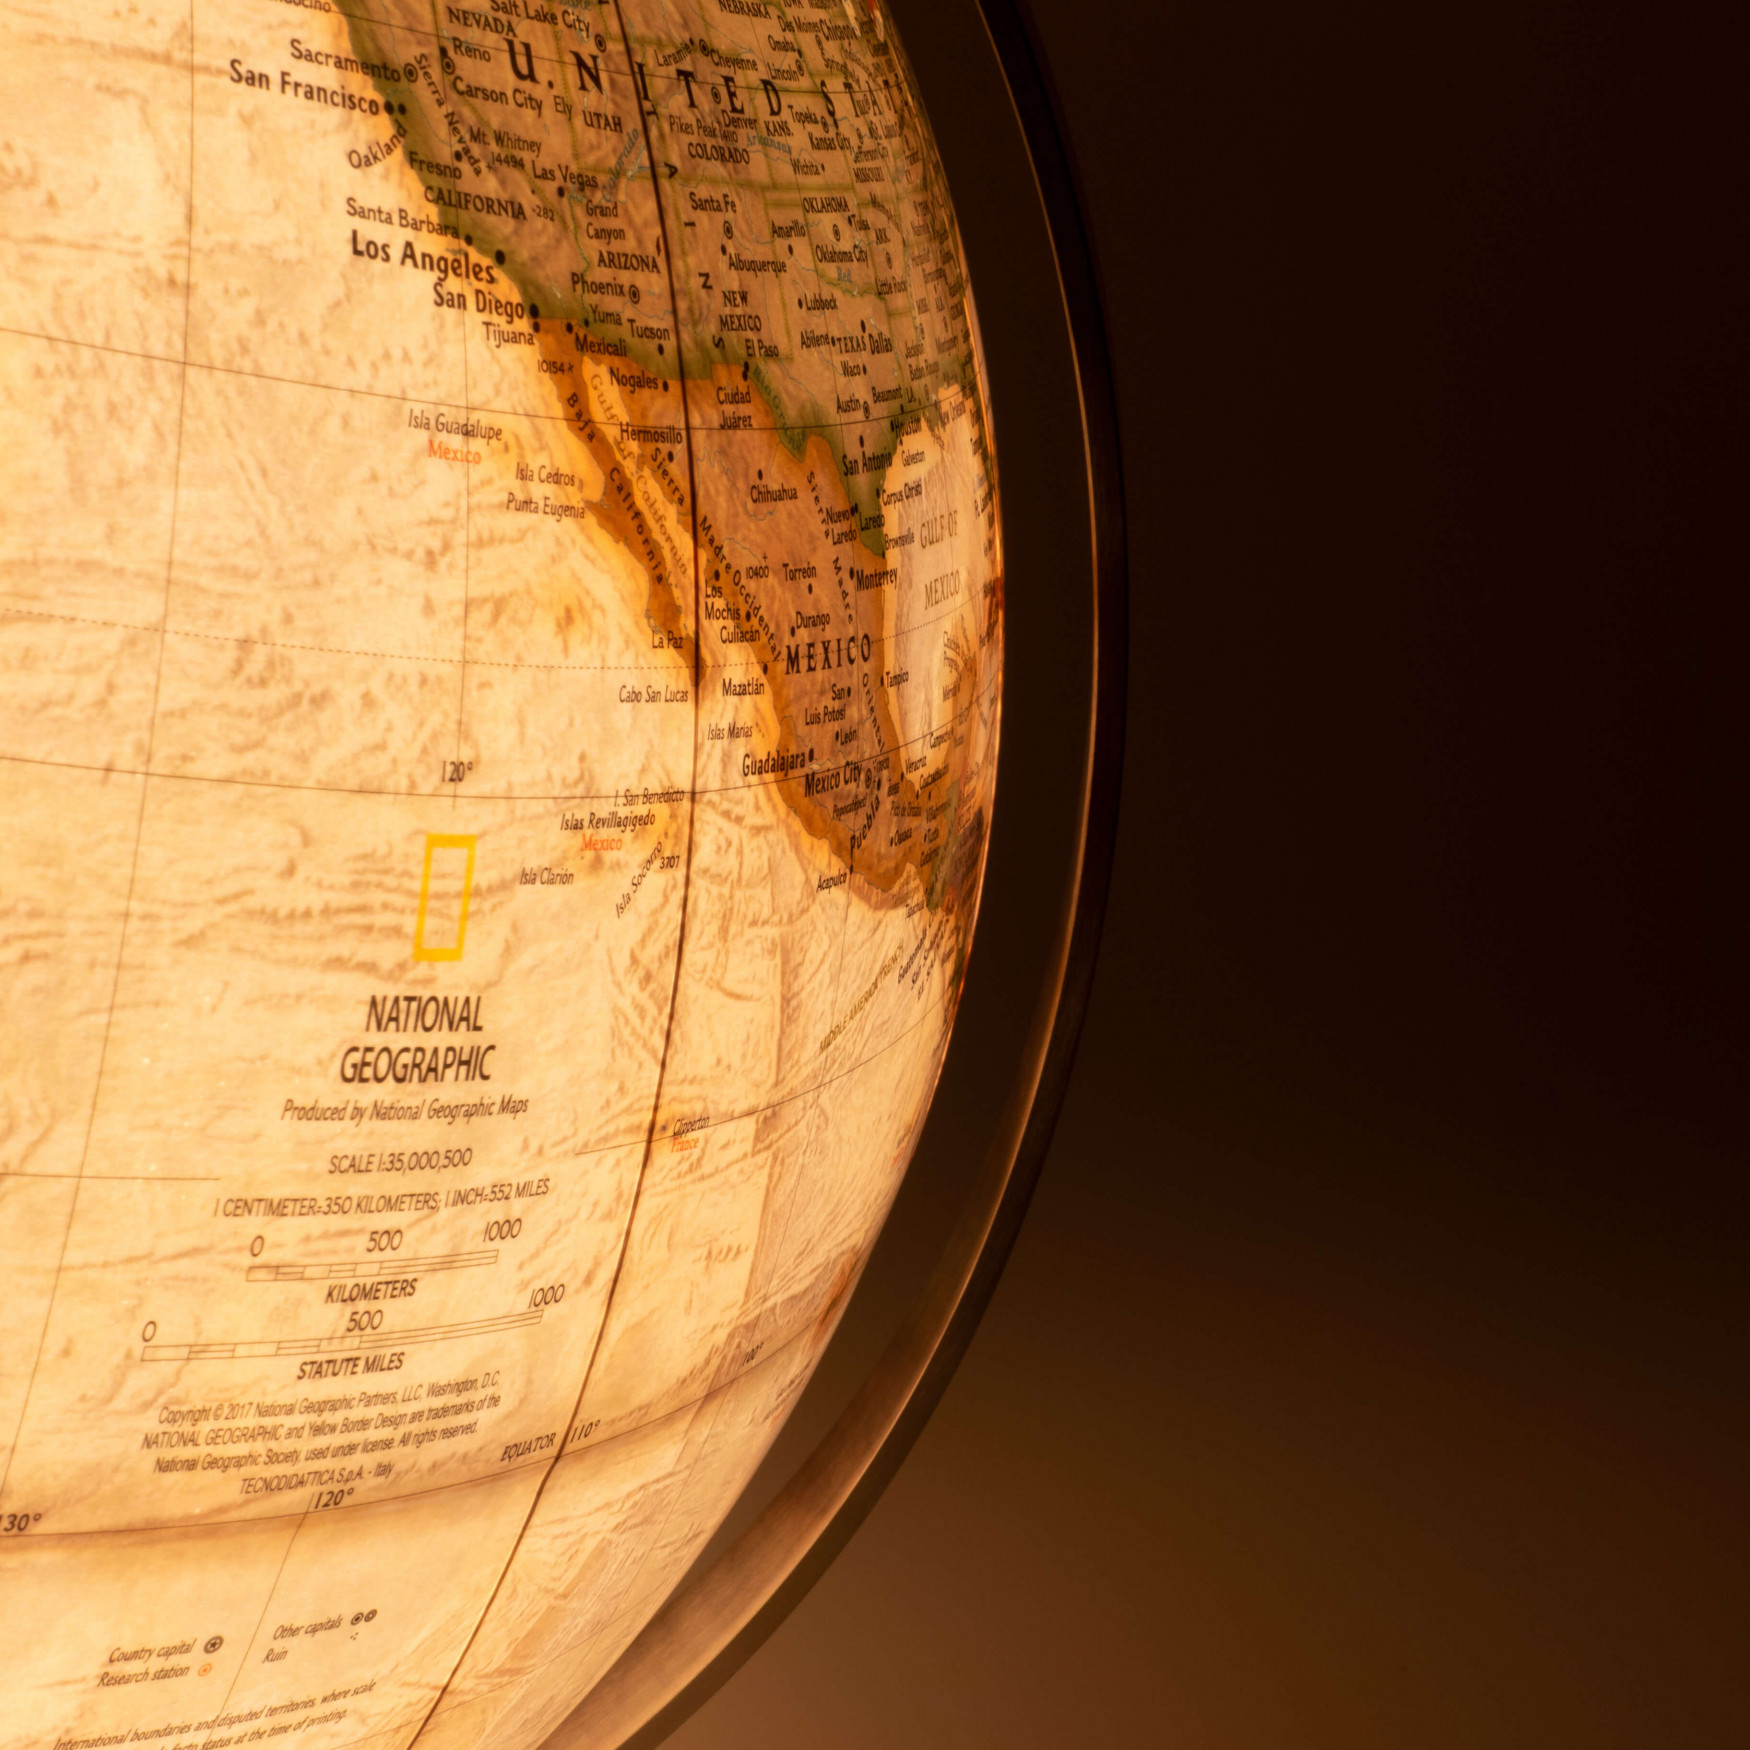 National Geographic Fusion Executive Illuminated Globe 37cm Antique